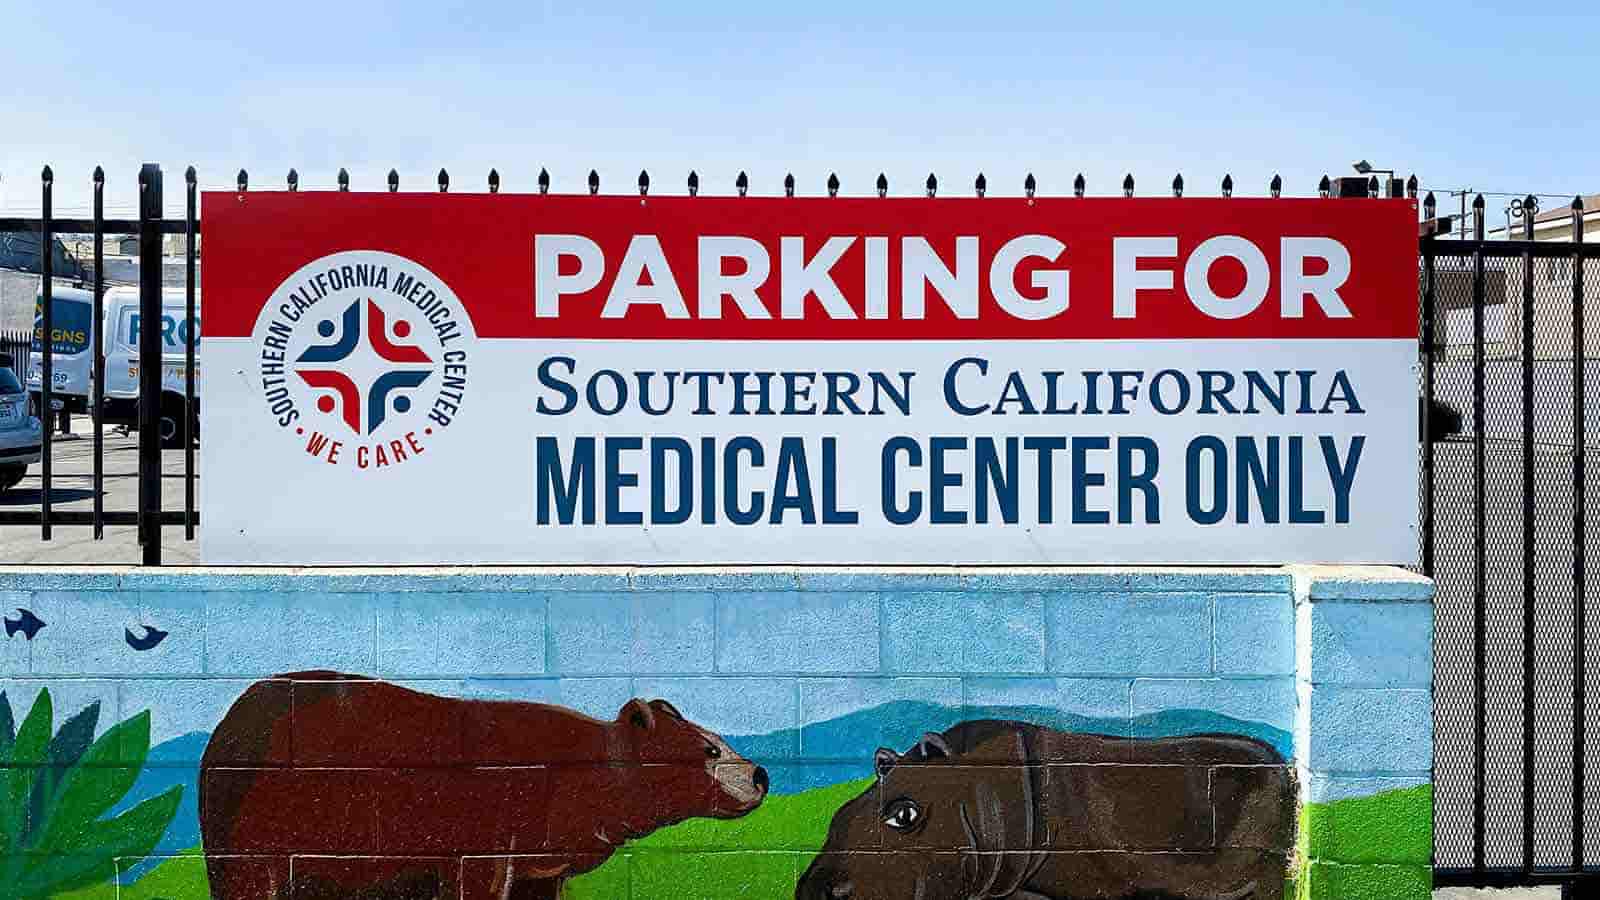 southern california medical center parking signage